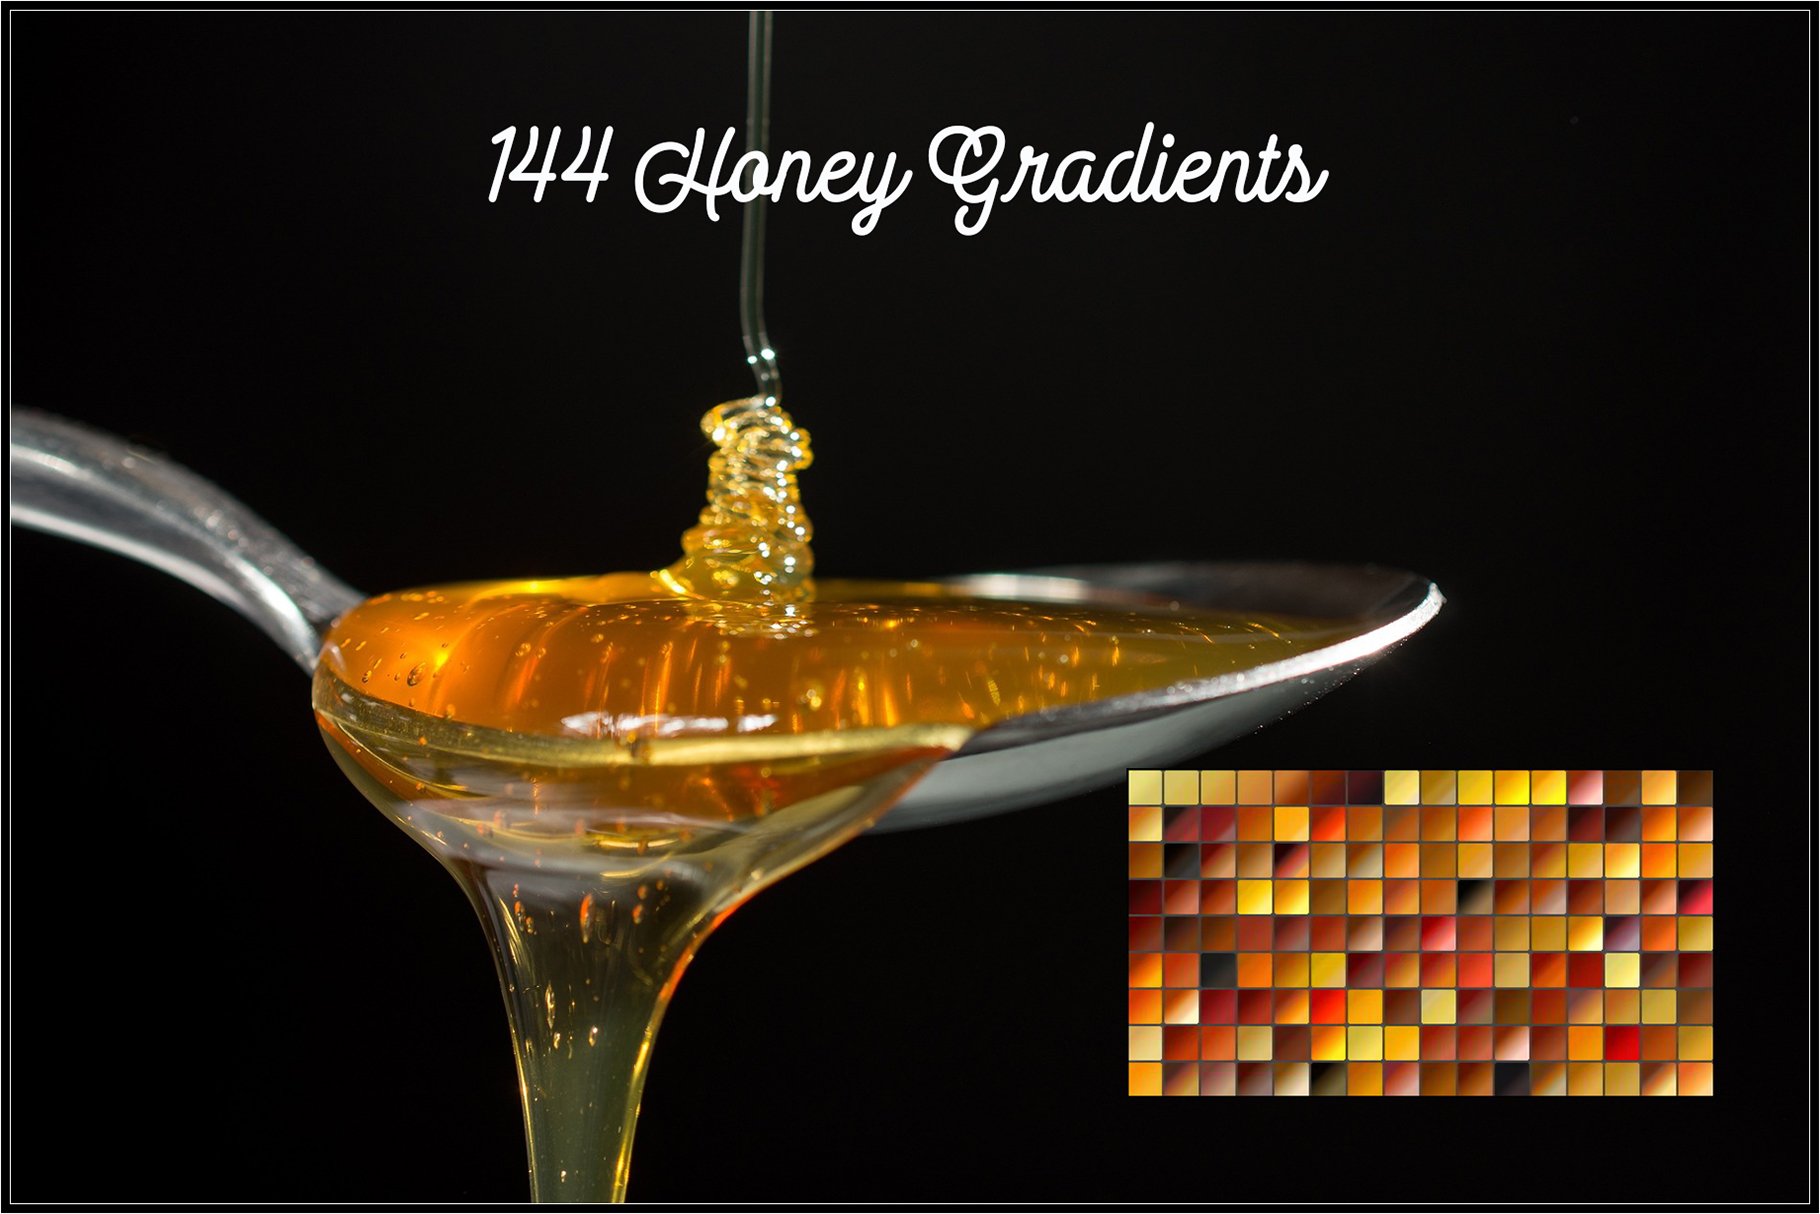 Honey Gradientspreview image.